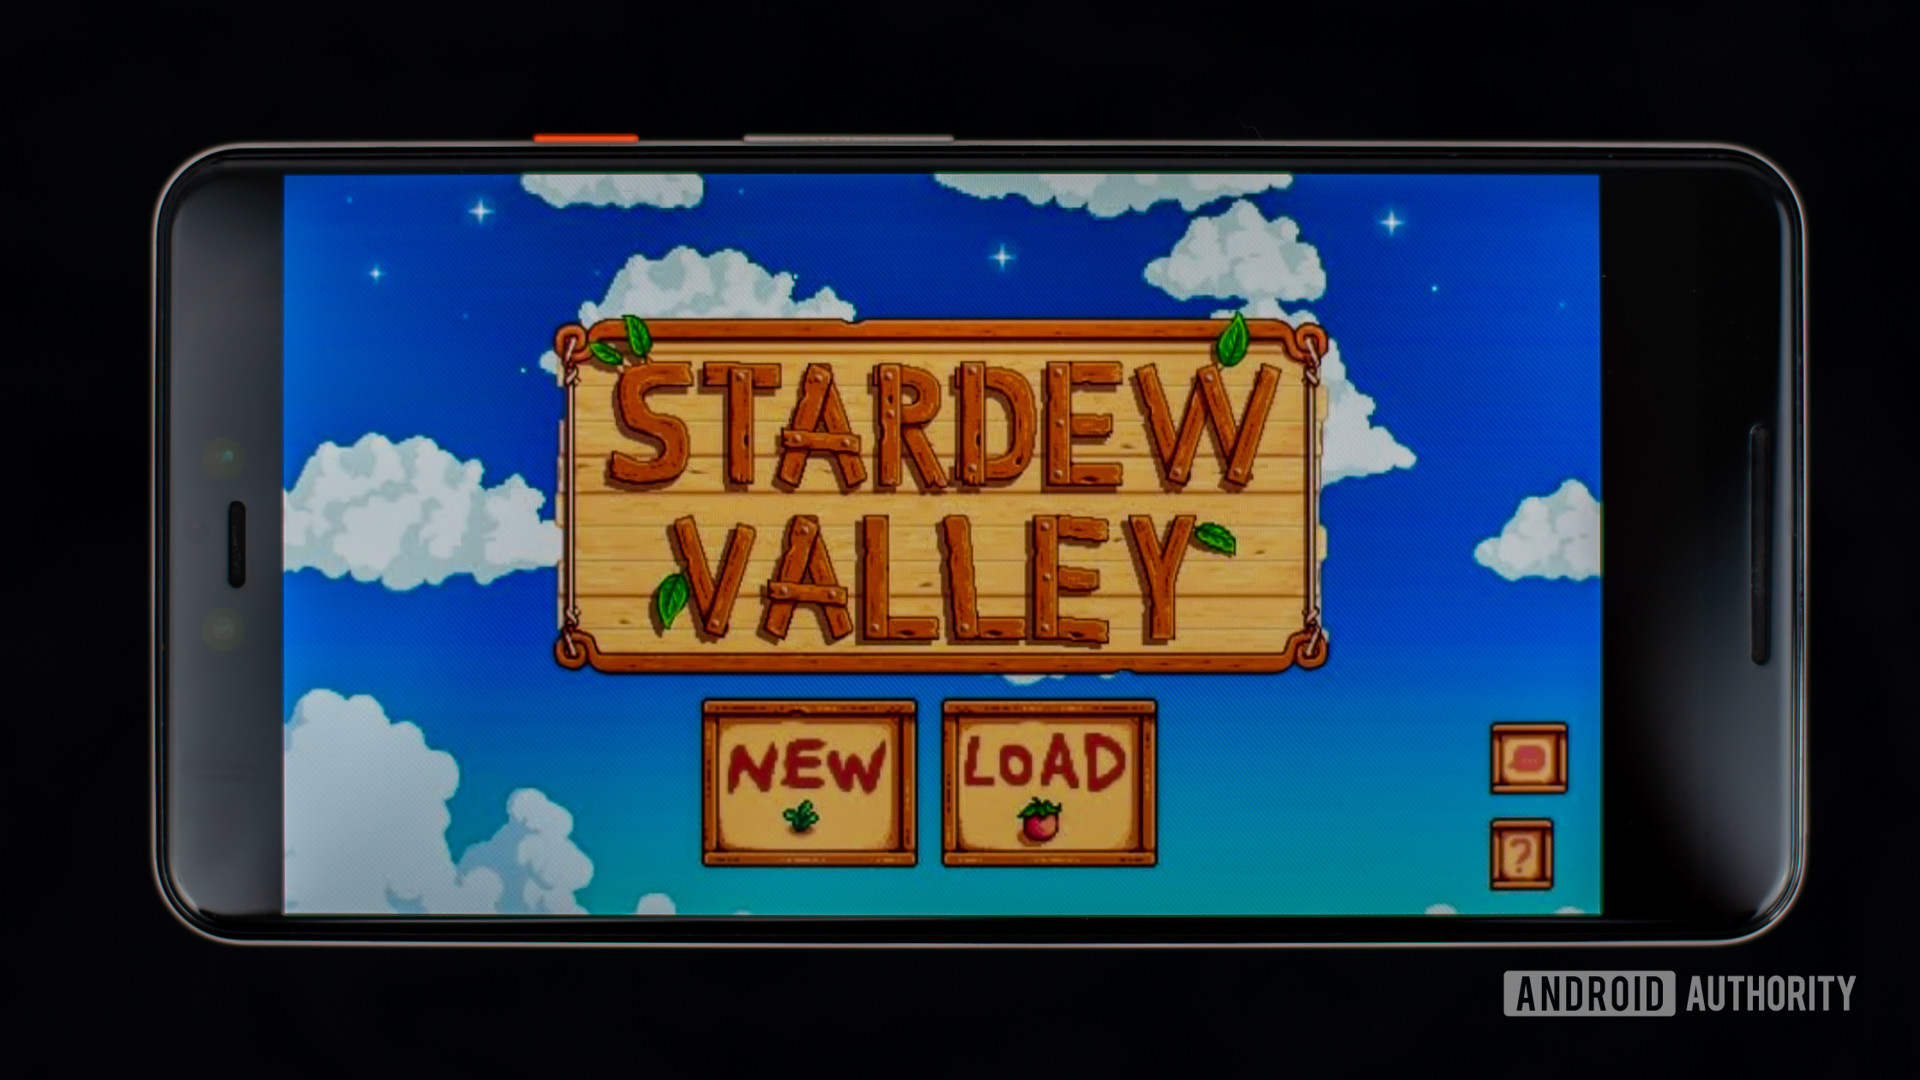 Stardew Valley game stock photo 2